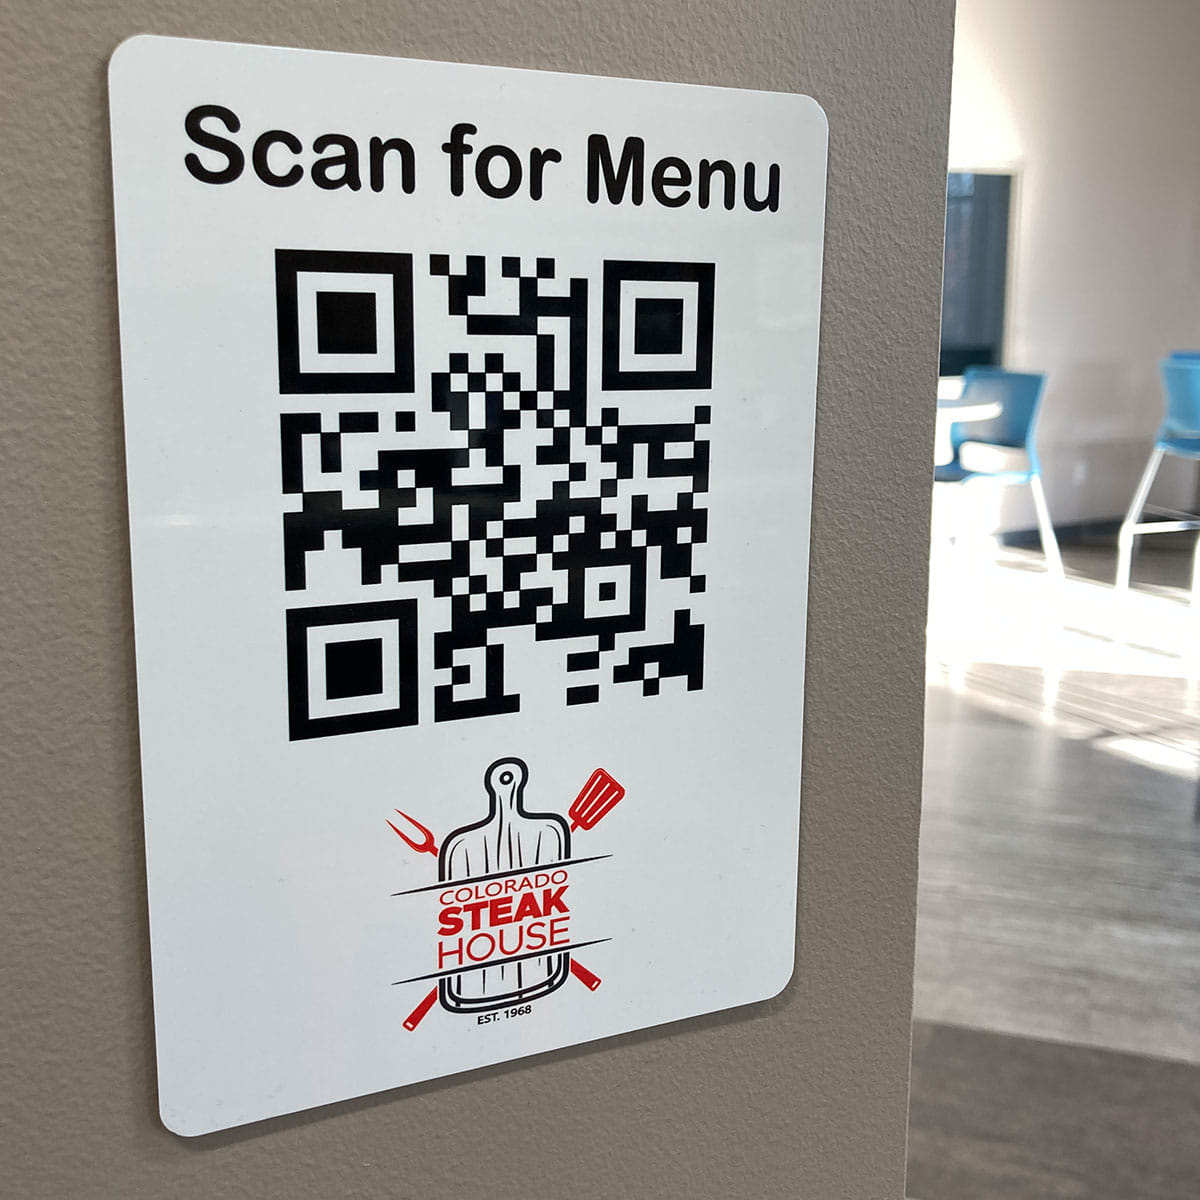 A menu QR code scanning sign